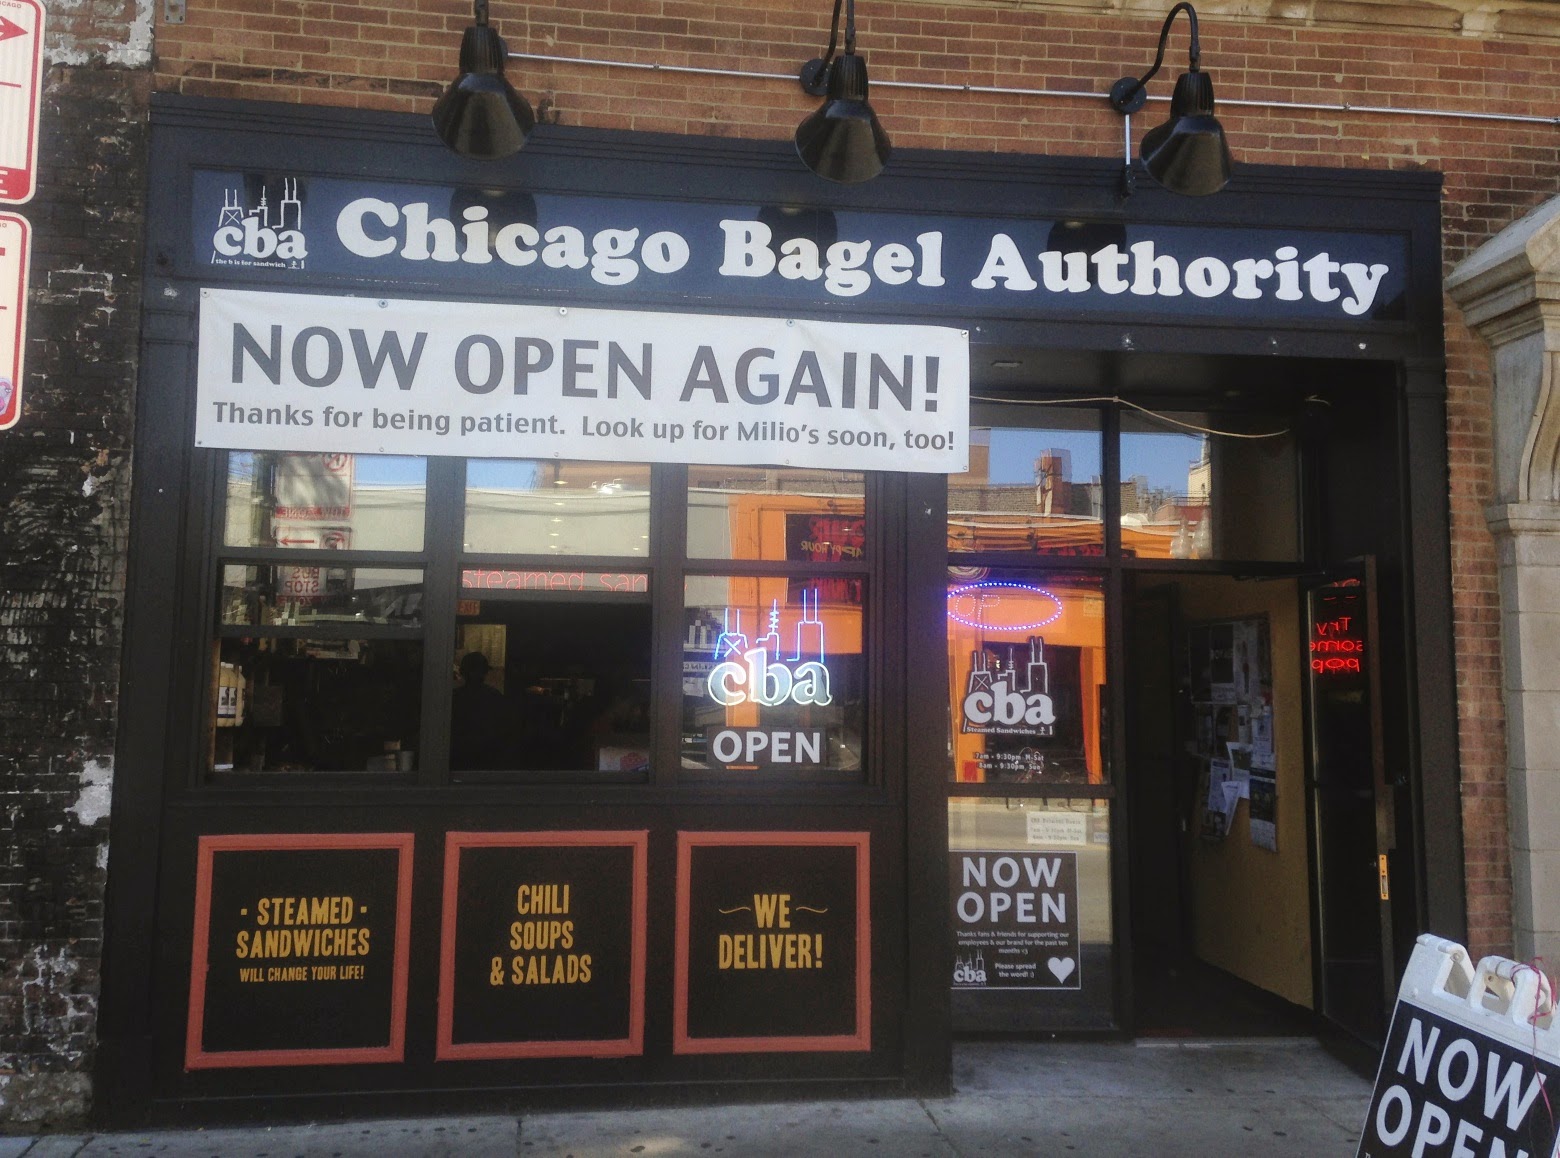 Chicago Bagel Authority